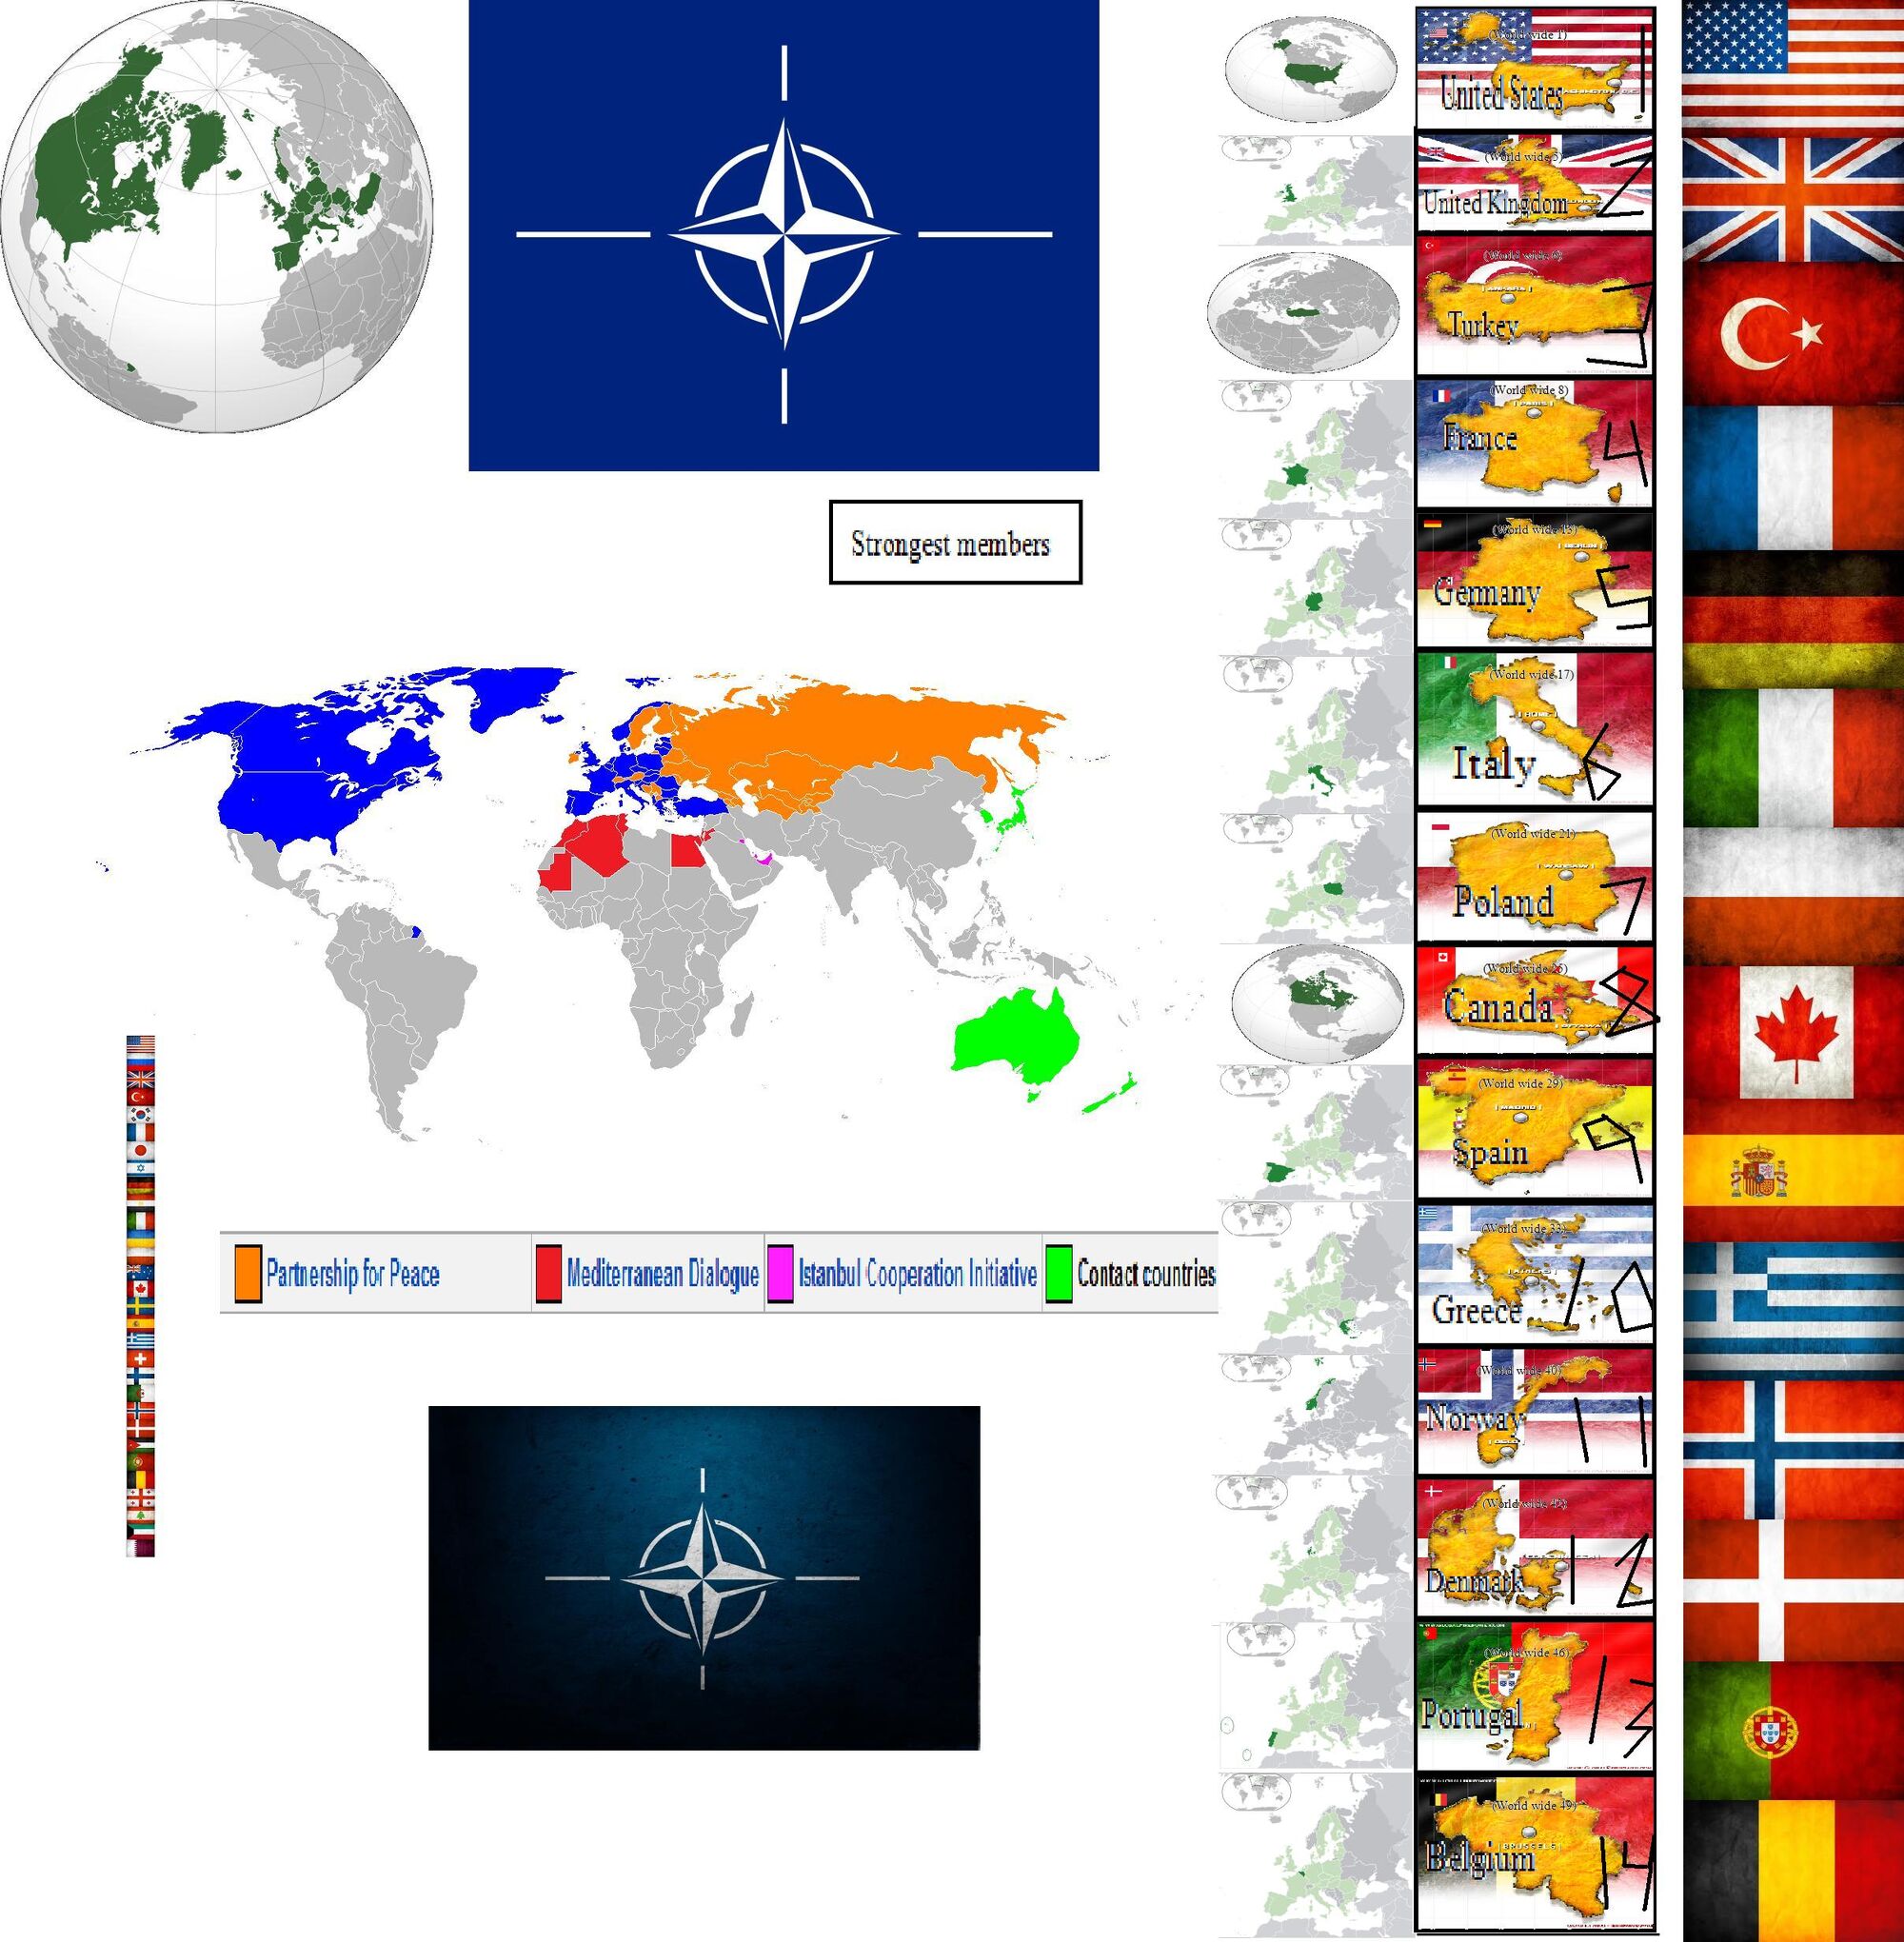 Image - Nato most powerful countries..jpg | Military Wiki | FANDOM